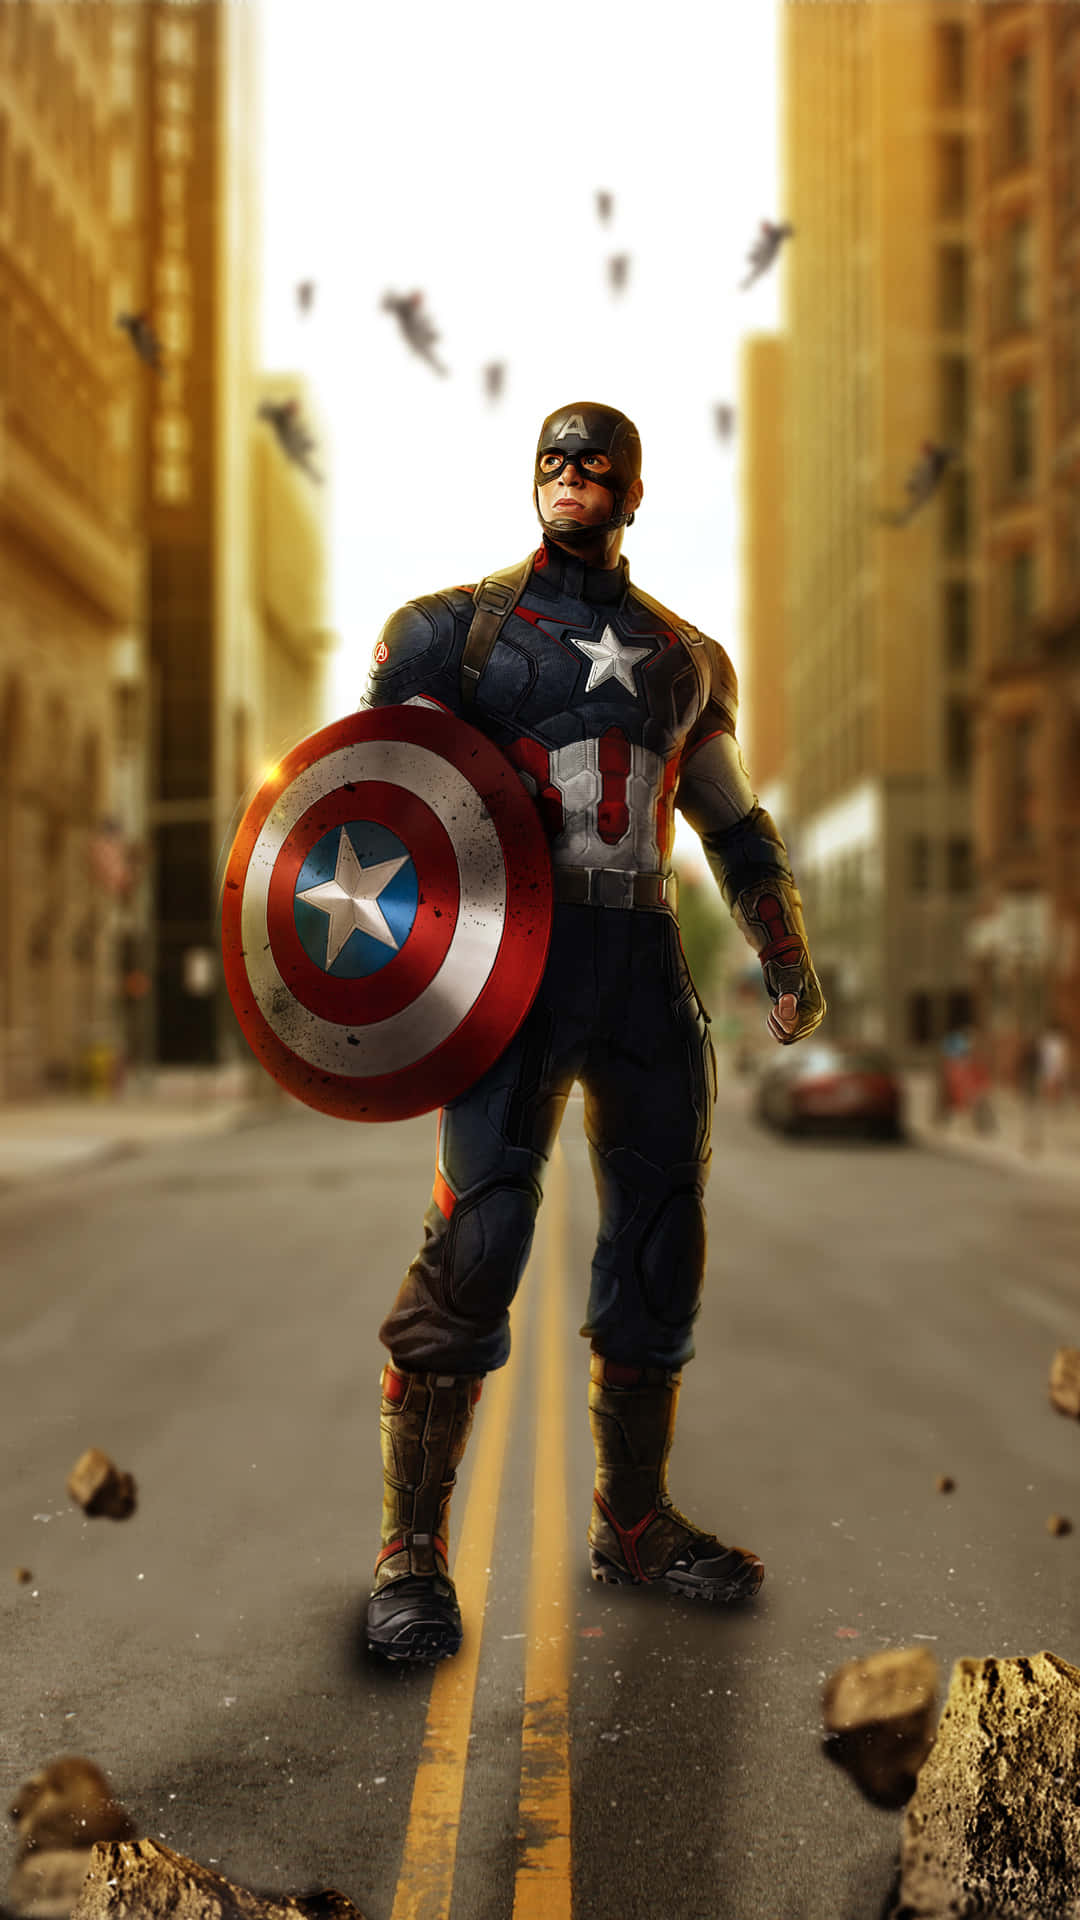 Captain America shielding the world with his vibranium shield.